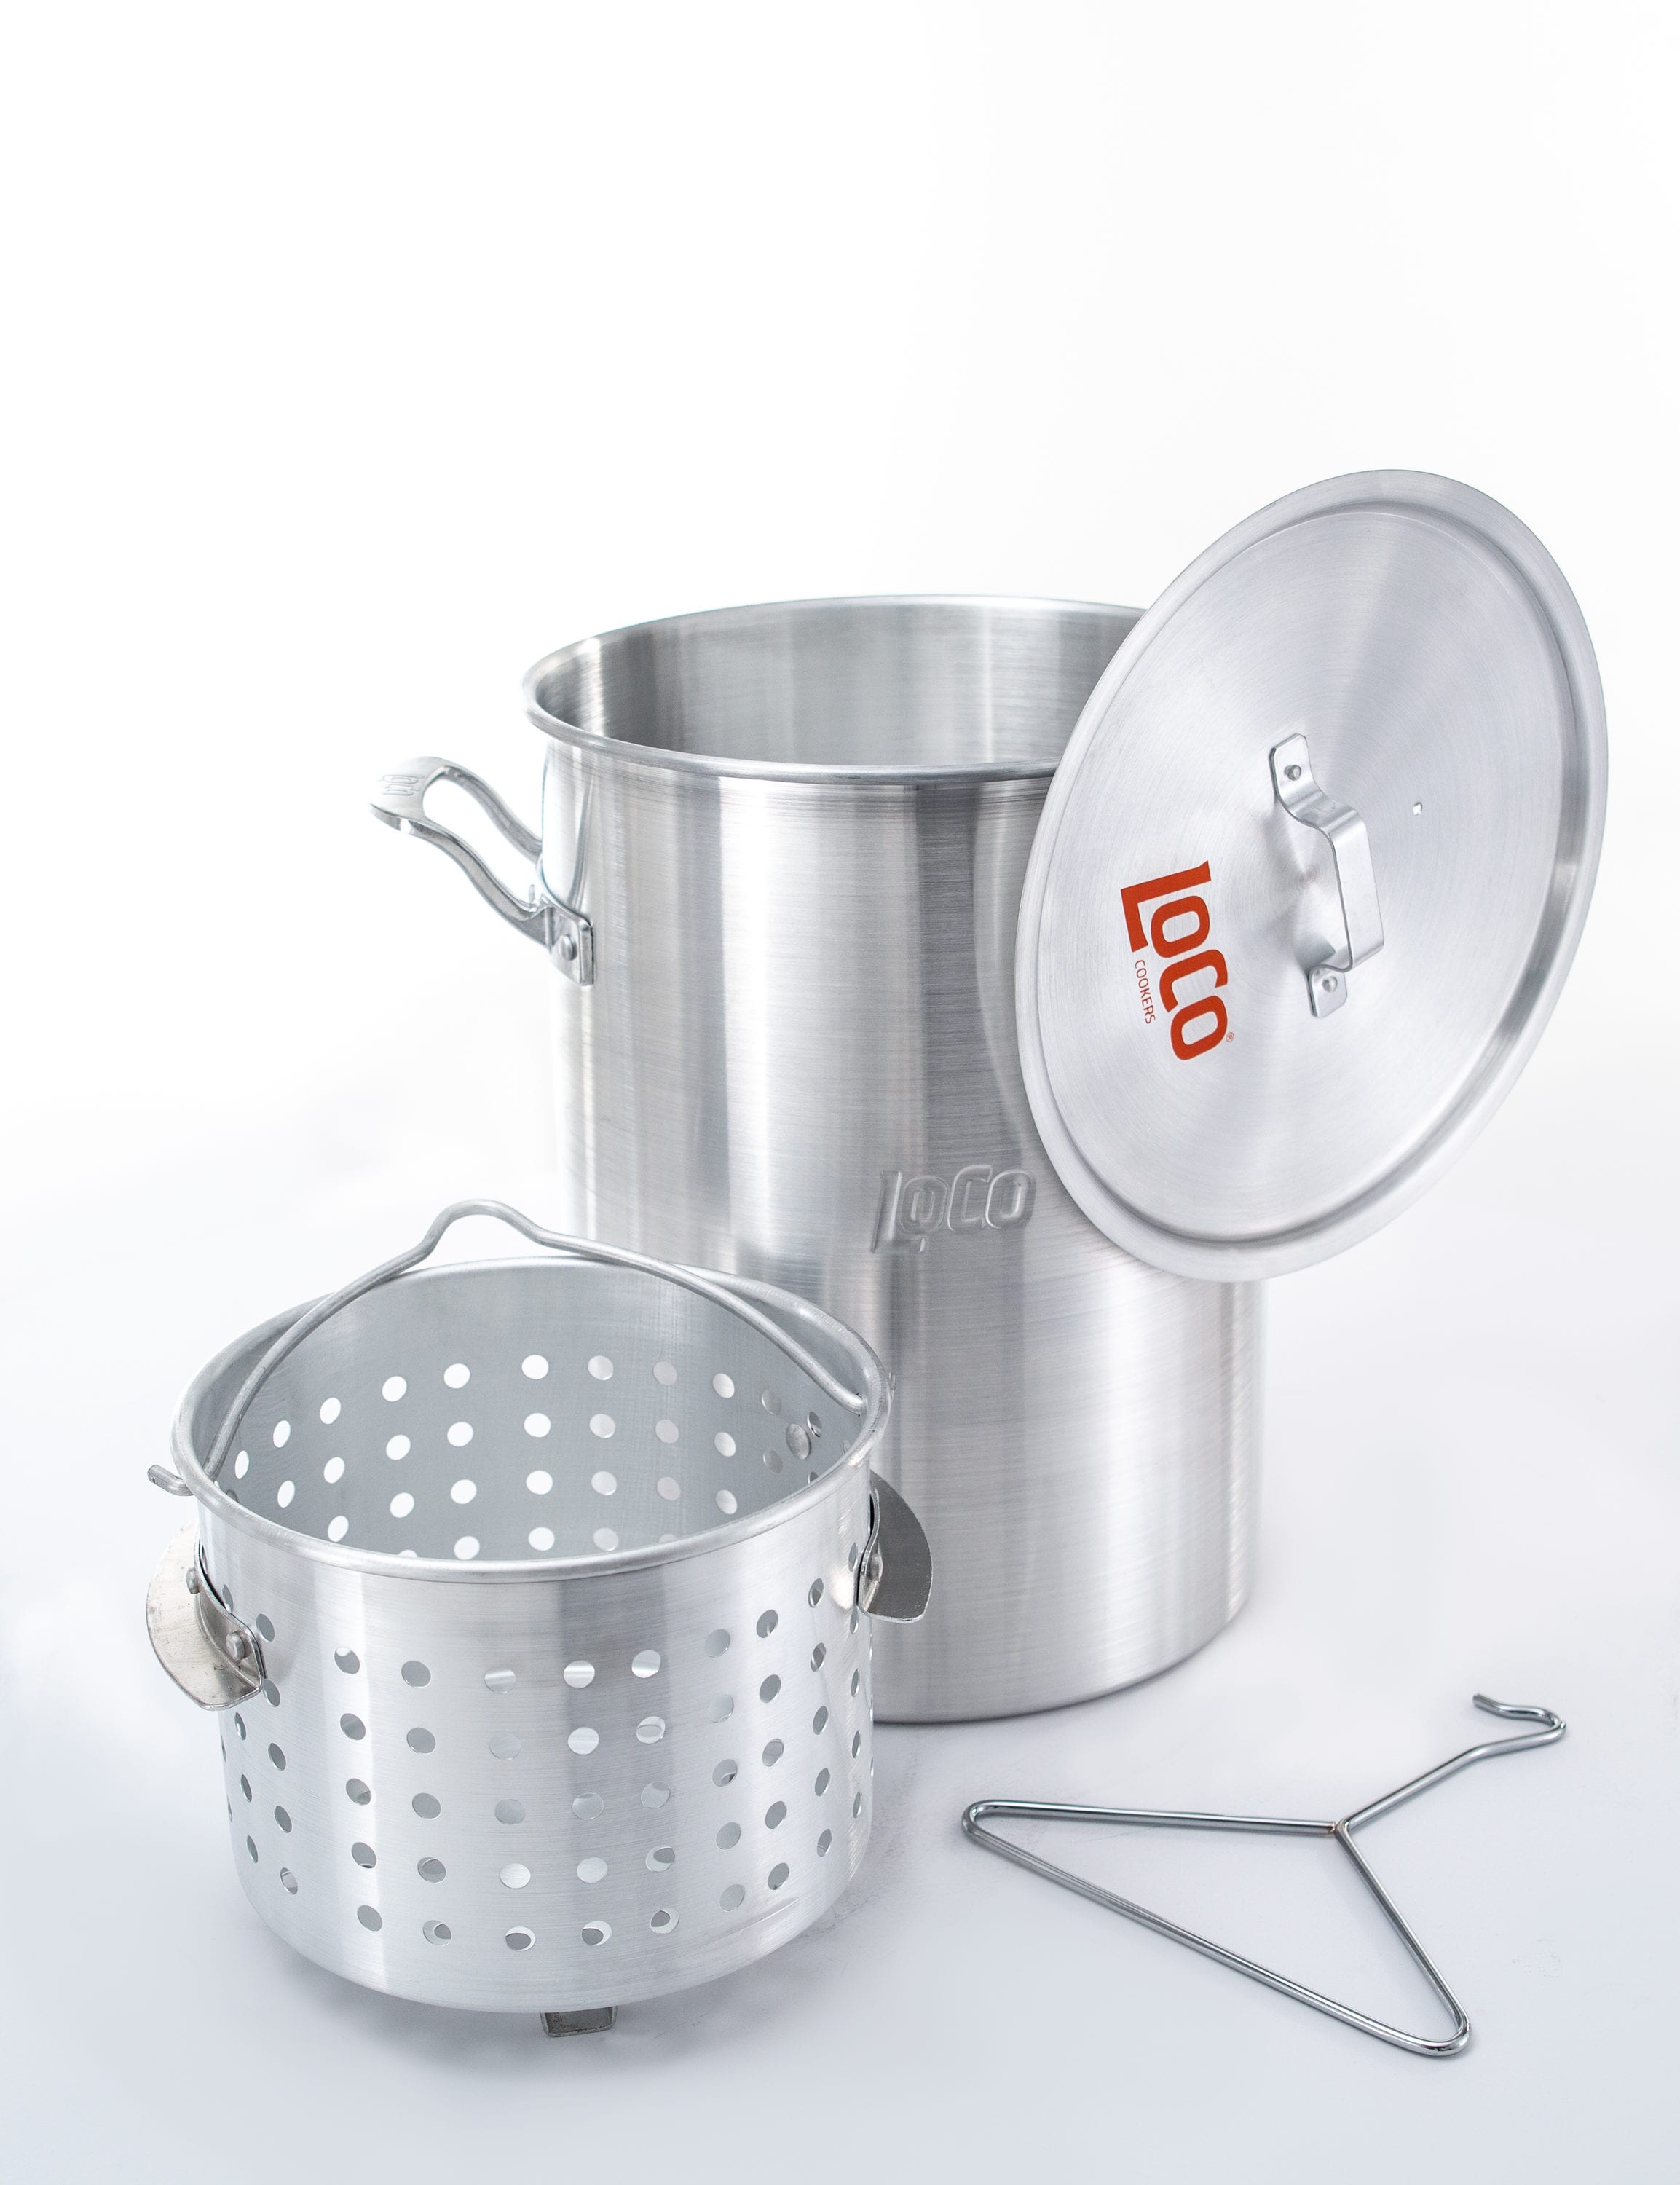 King Kooker 10 Quart Aluminum Deep Fryer Pan with Handles and Basket